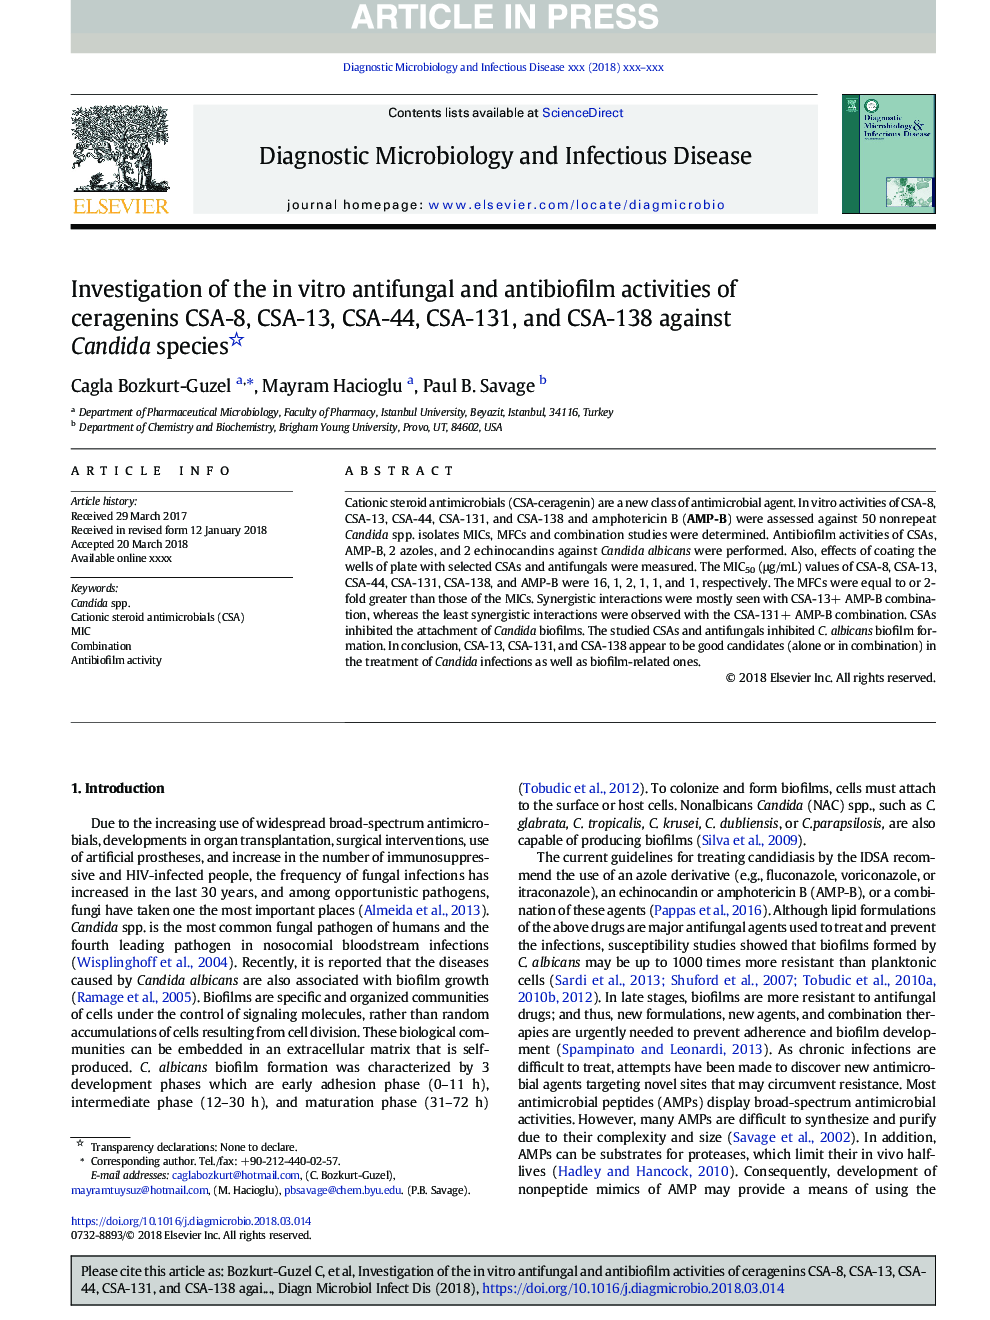 Investigation of the in vitro antifungal and antibiofilm activities of ceragenins CSA-8, CSA-13, CSA-44, CSA-131, and CSA-138 against Candida species